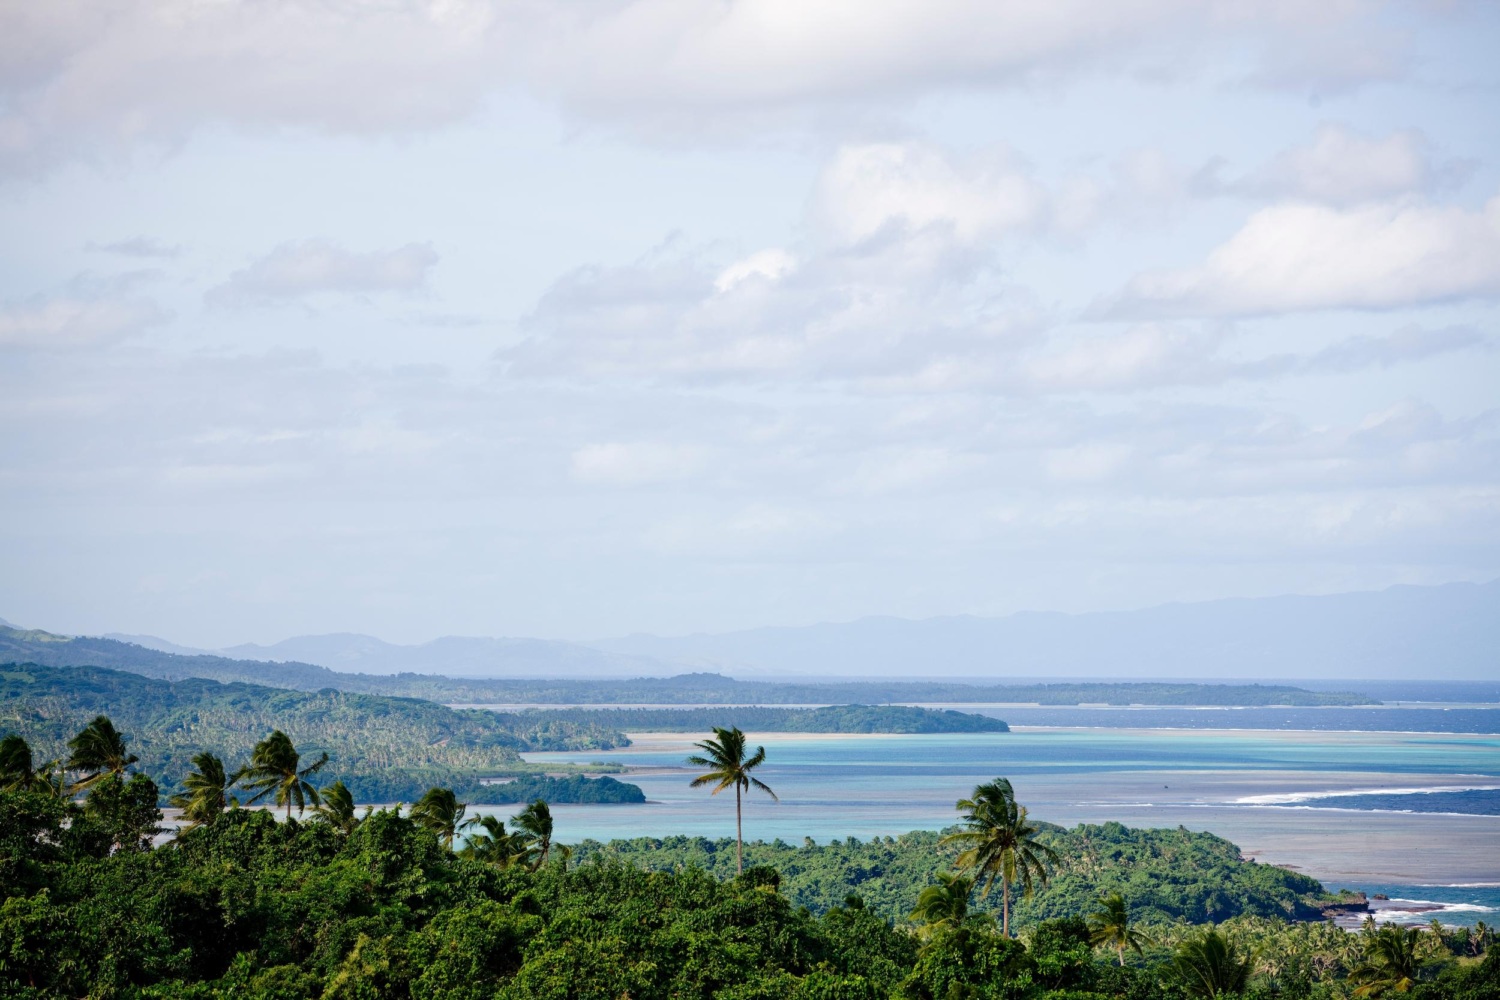 Beautiful view of the South coast of an island in Fiji called Vanua Levu.